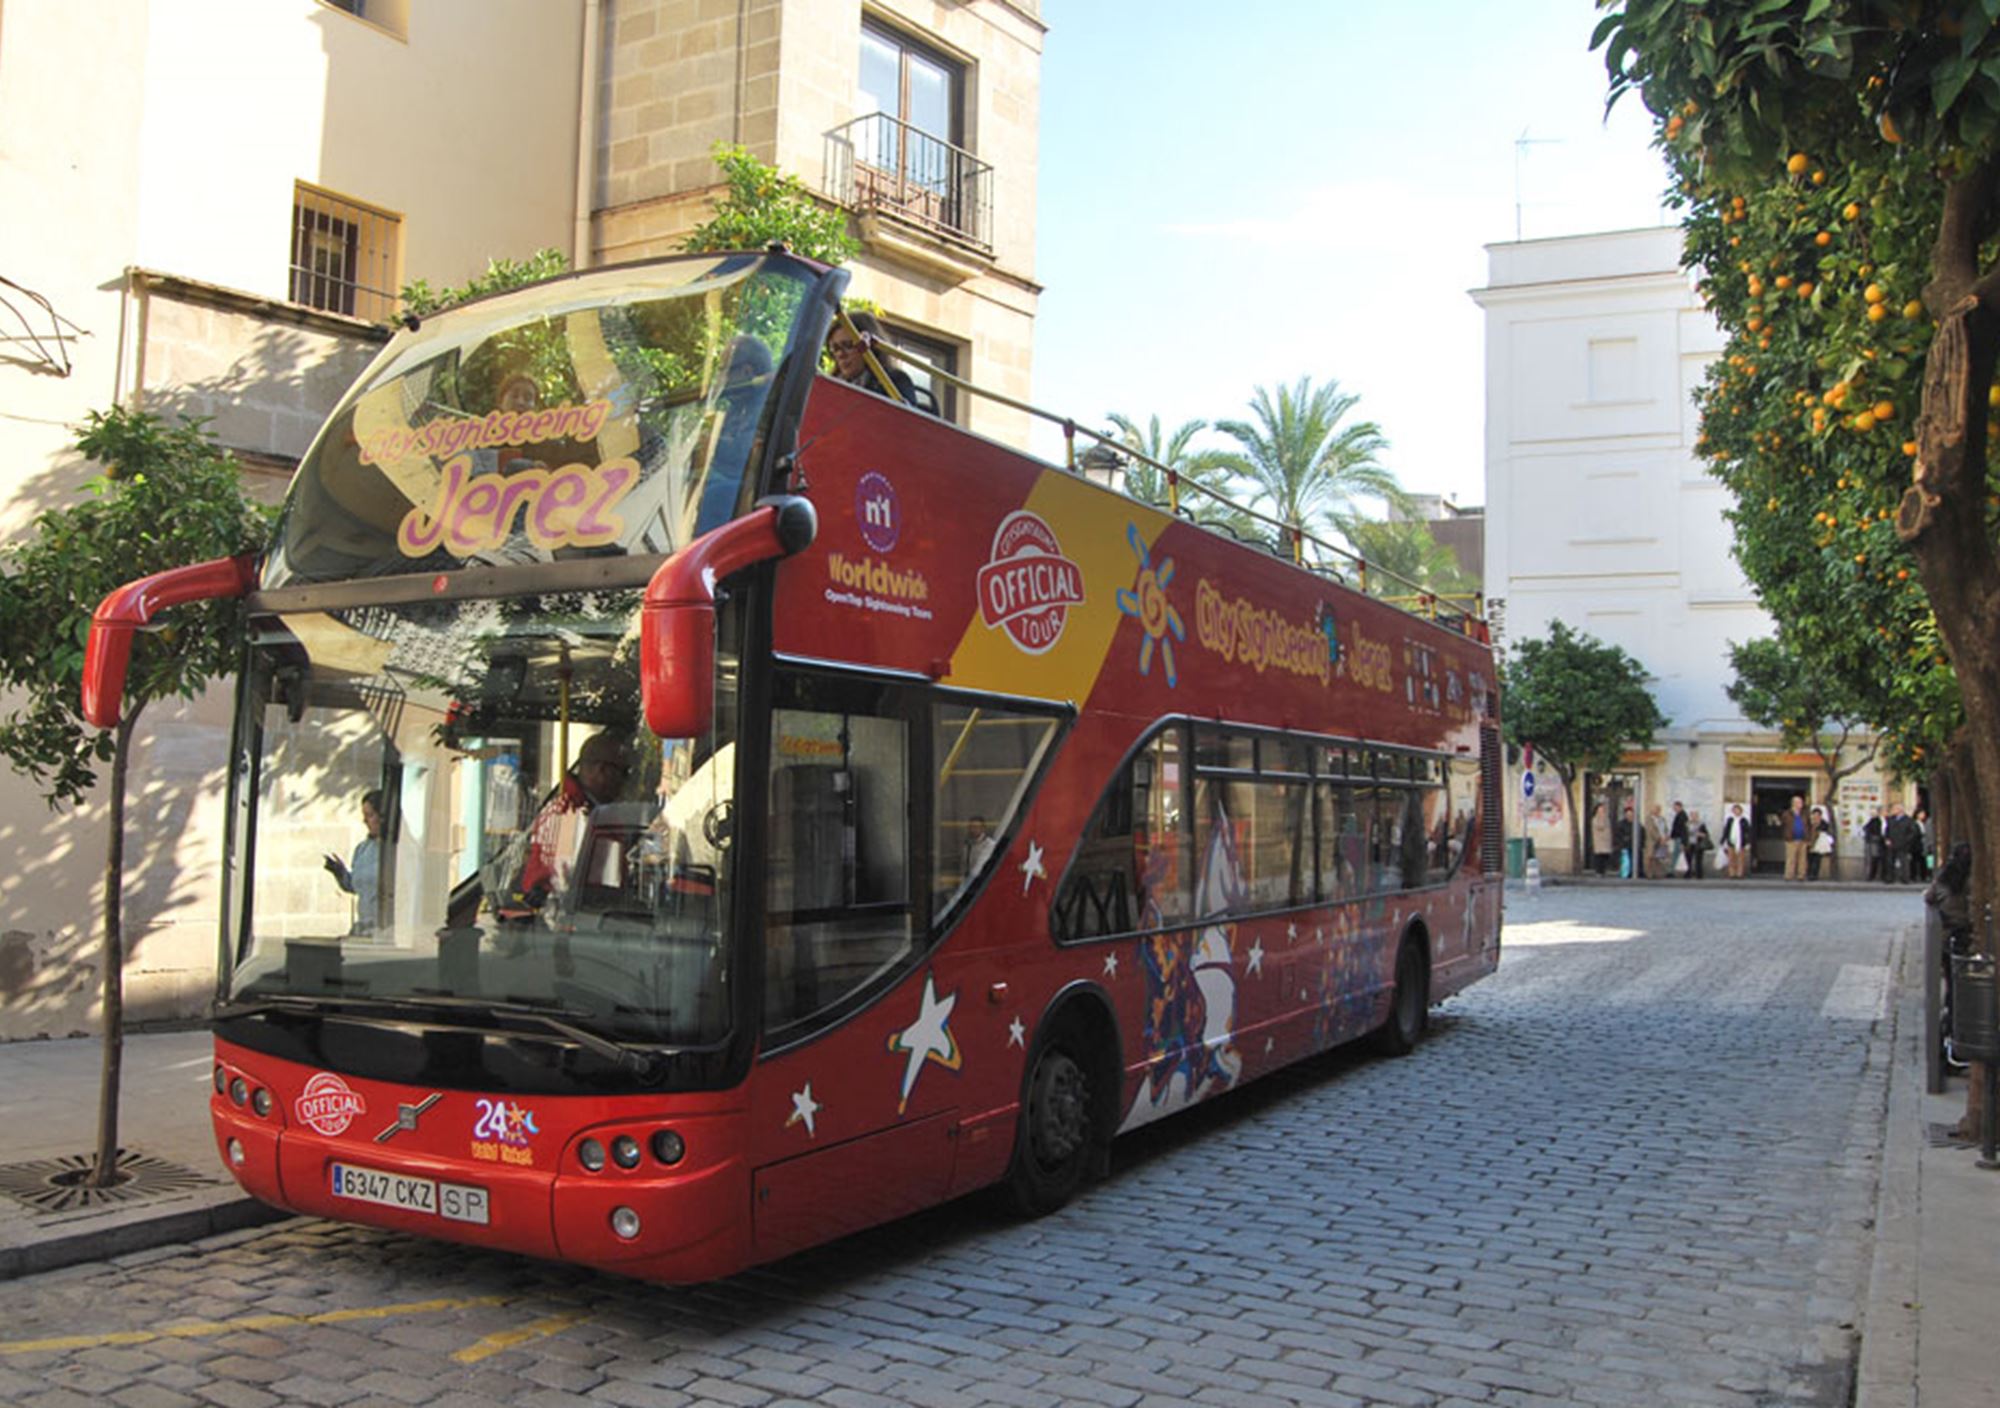 kaufen buchung tickets besucht Touren Fahrkarte karte Touristikbus City Sightseeing Jerez de la Frontera